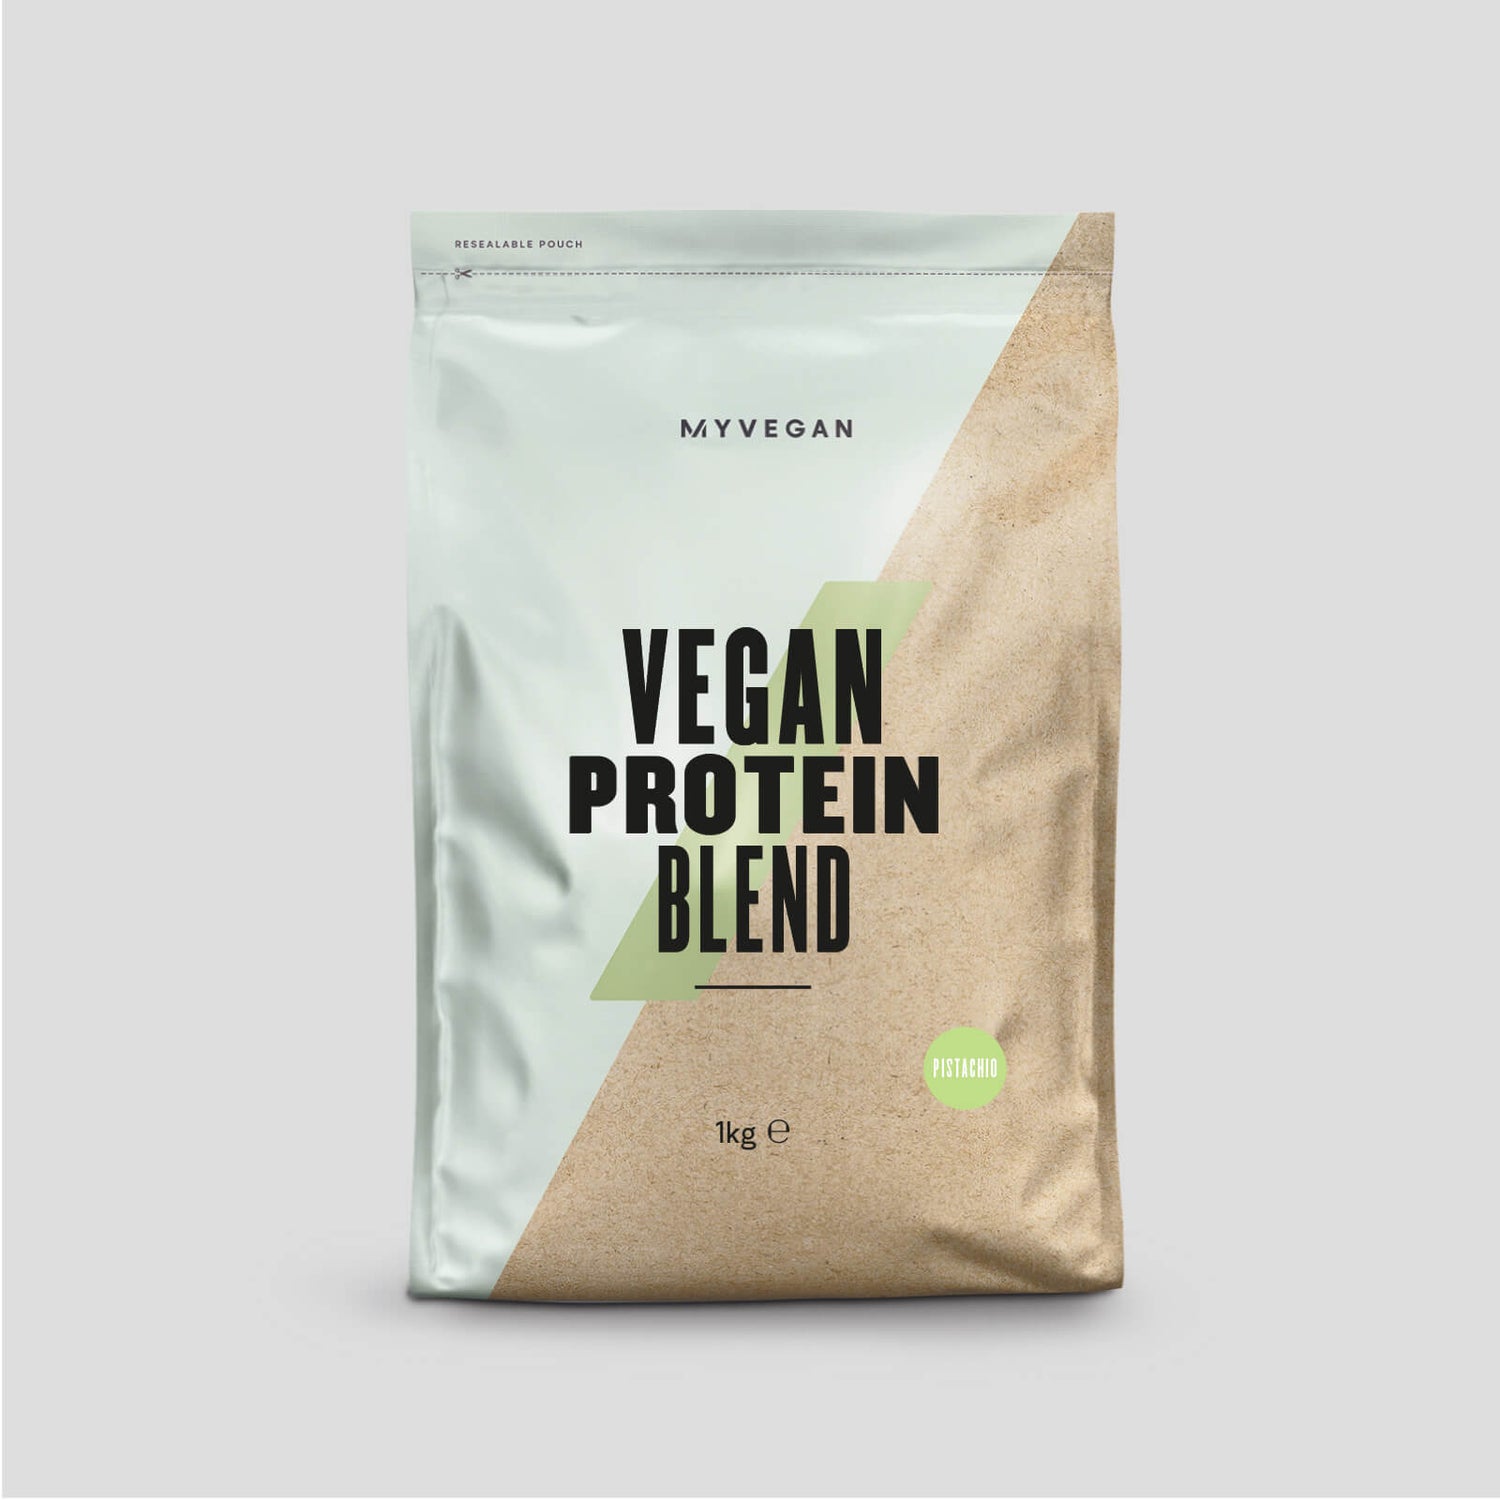 Pistachio Vegan Protein Blend - Limited Edition